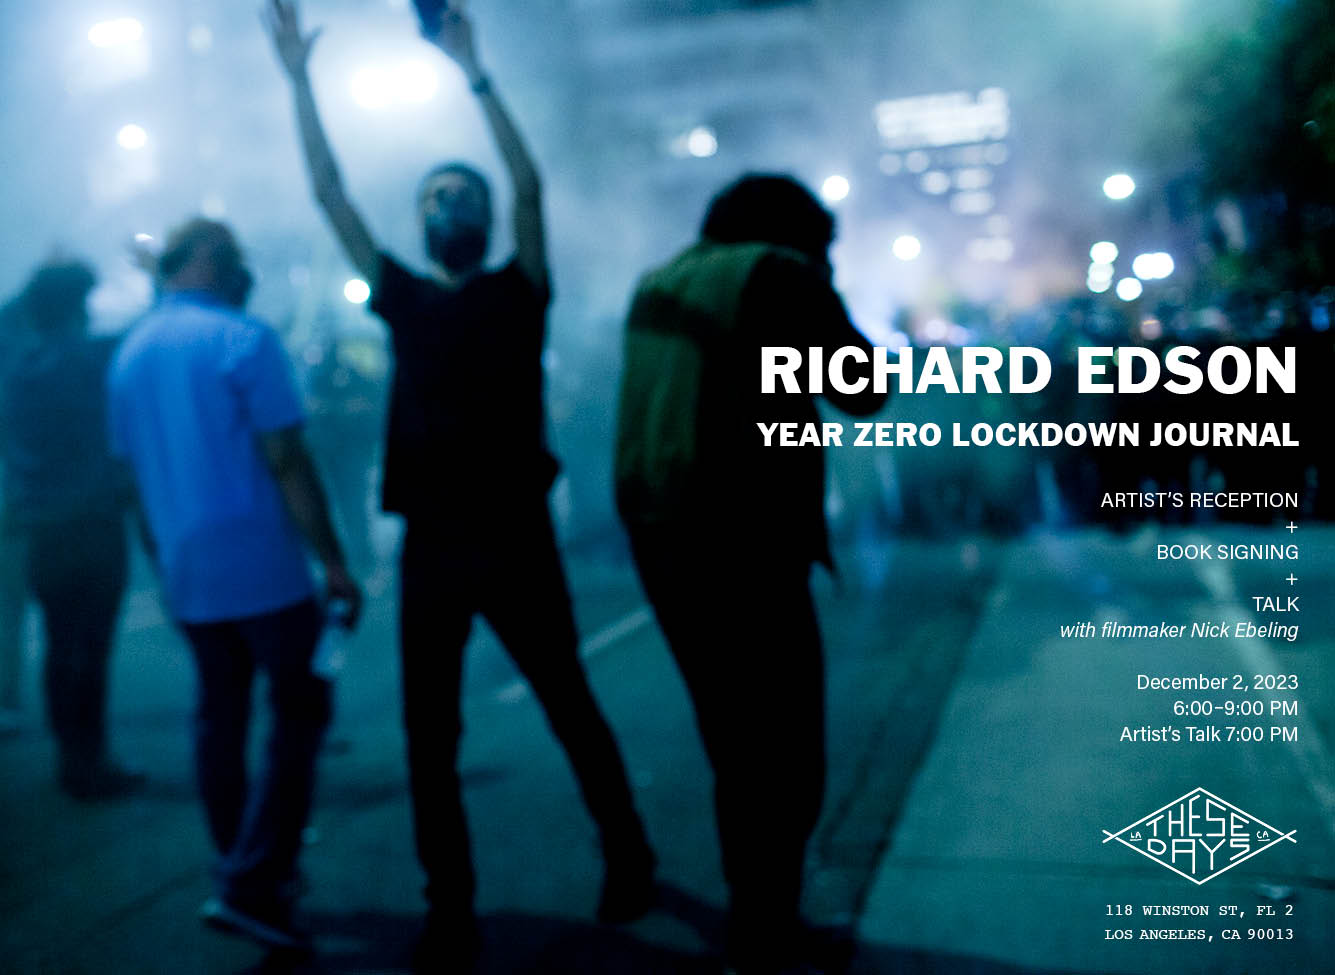 RICHARD EDSON | Year Zero Lockdown Journal